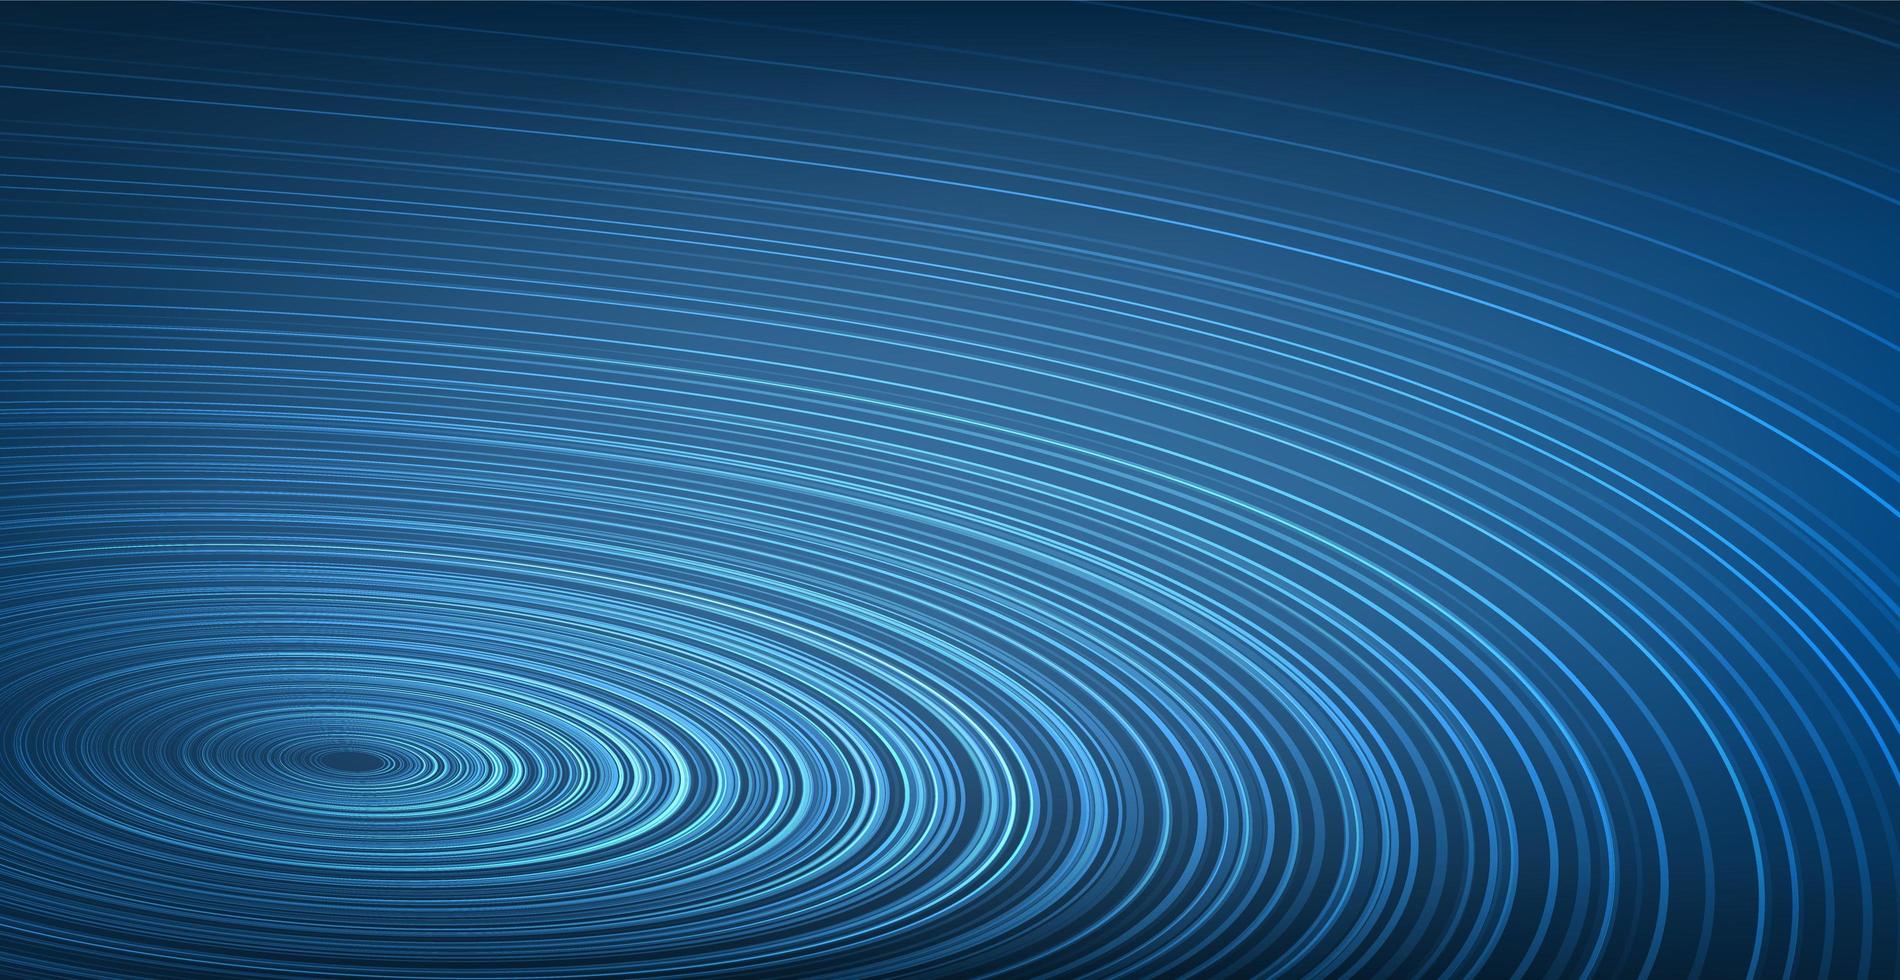 Circle Blue Digital Sound Wave vector